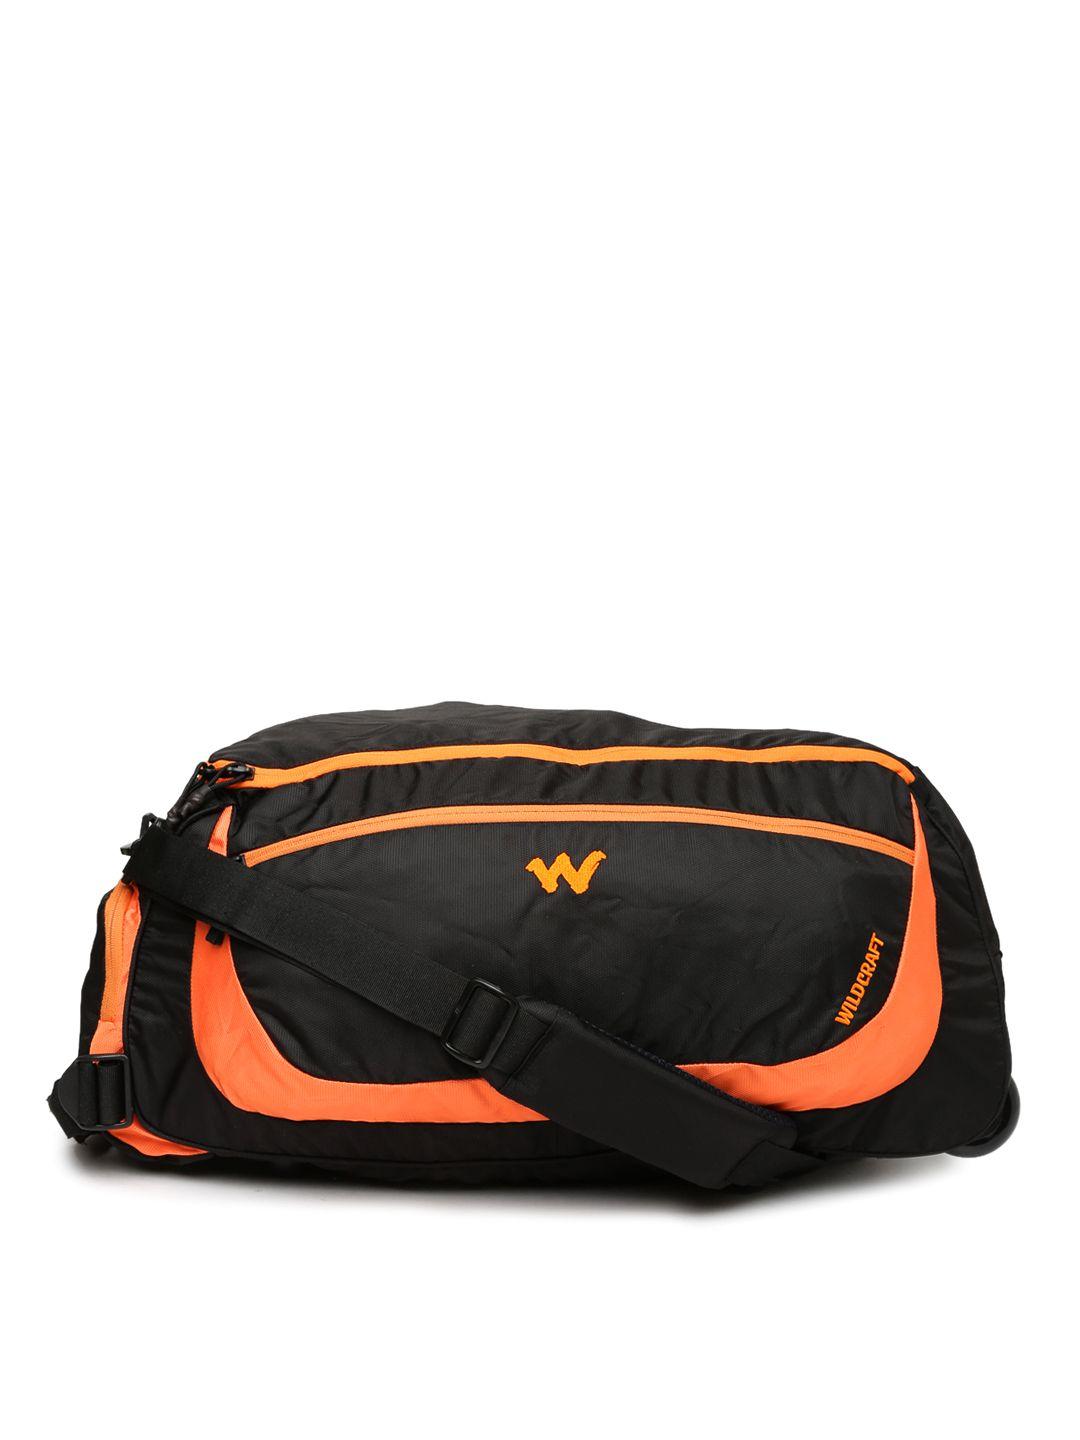 wildcraft unisex black & orange rover duffel bag with skate wheels